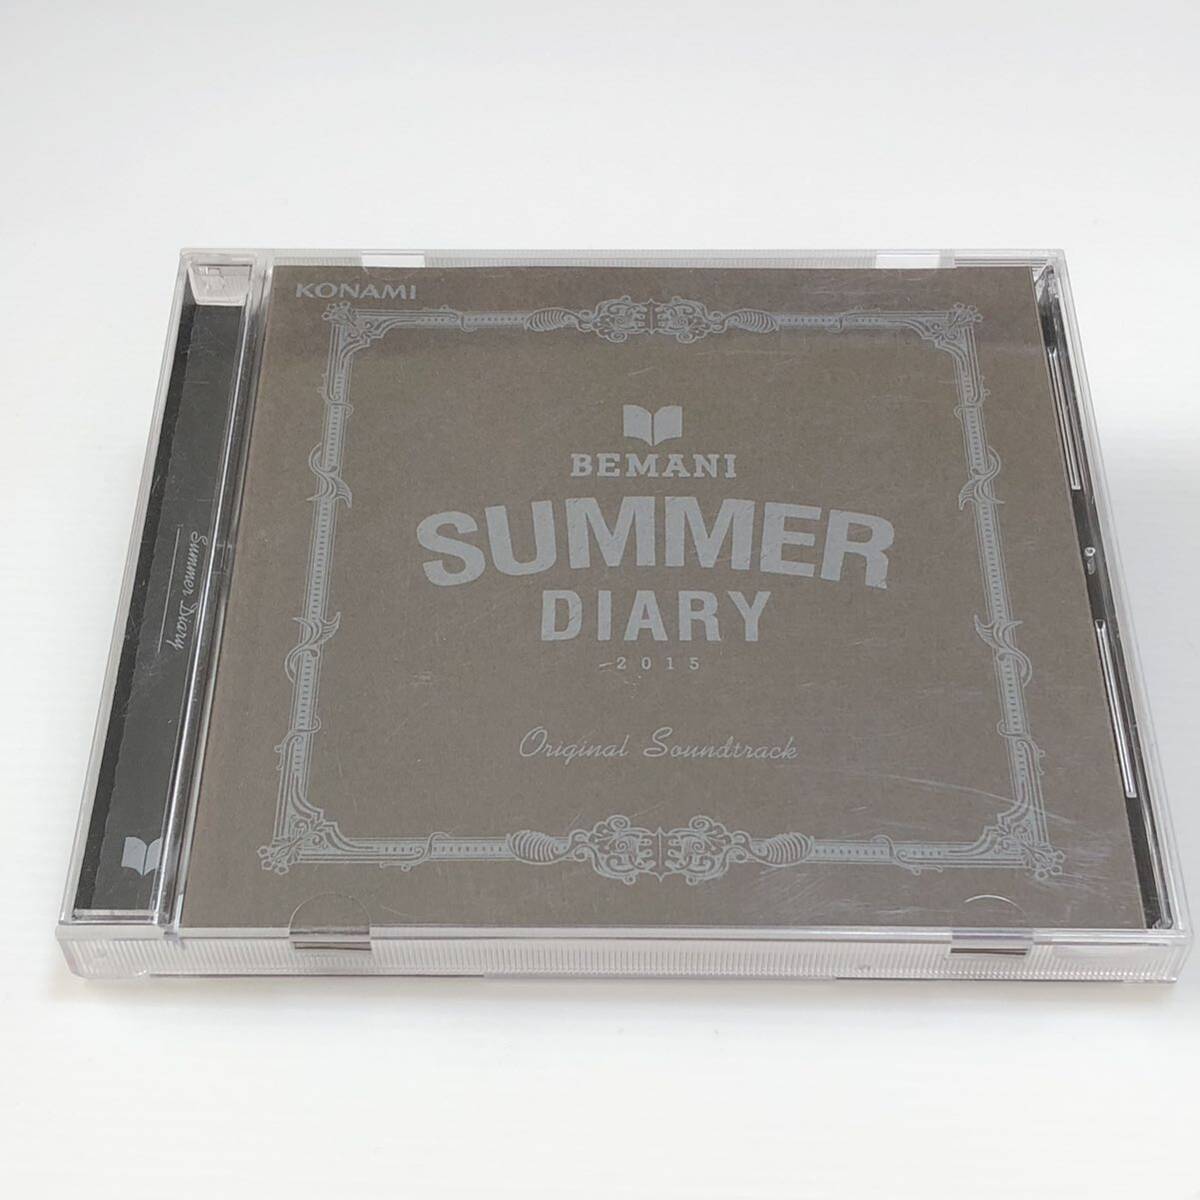 m197-0252-6 KONAMI コナミ BEMANI SUMMER DIARY 2015 CD _画像2